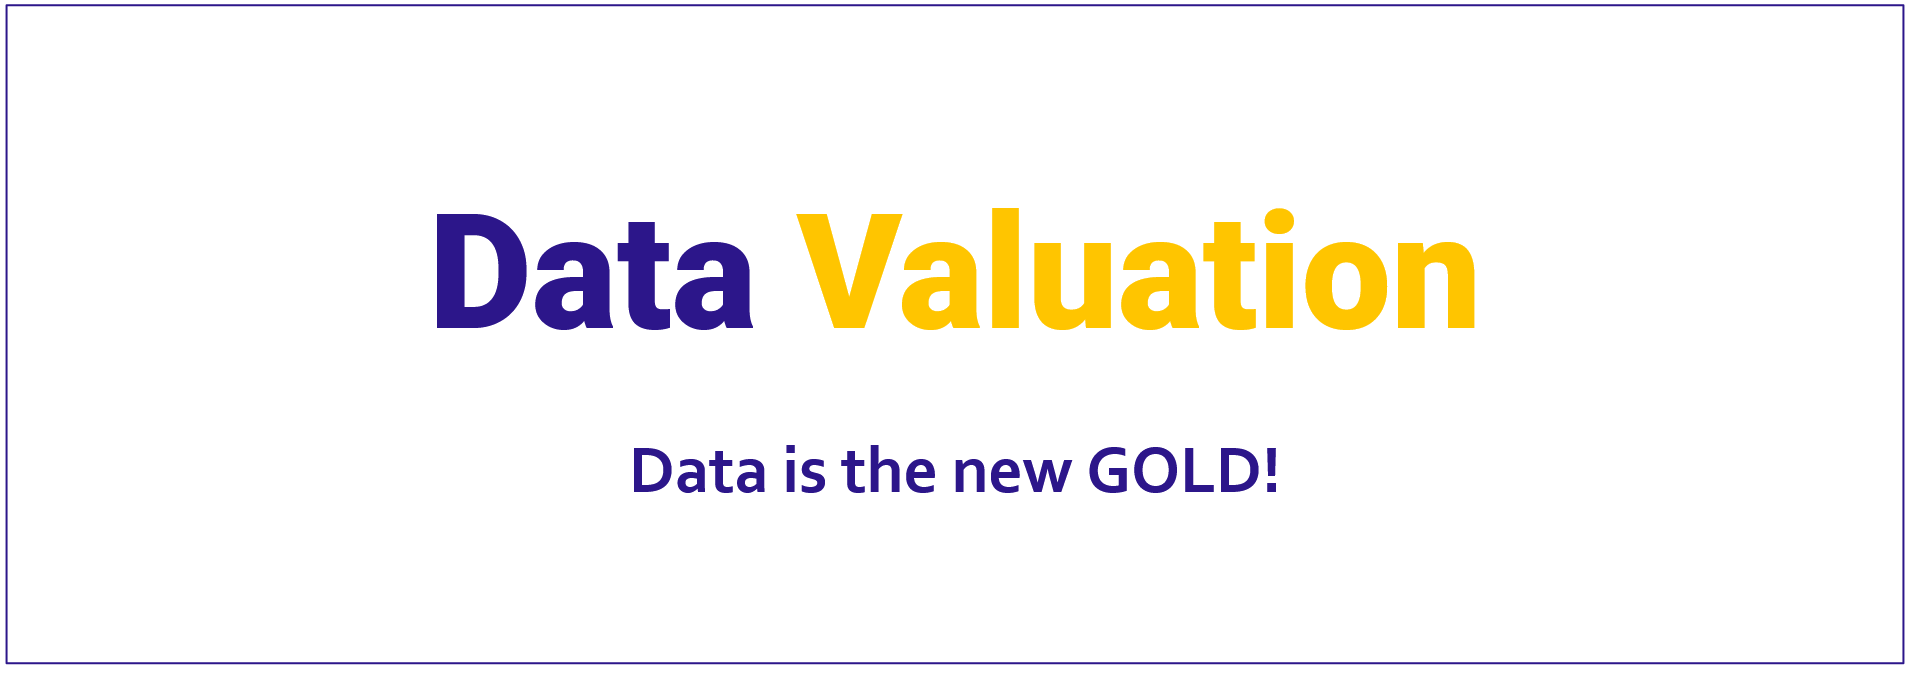 Data valuation